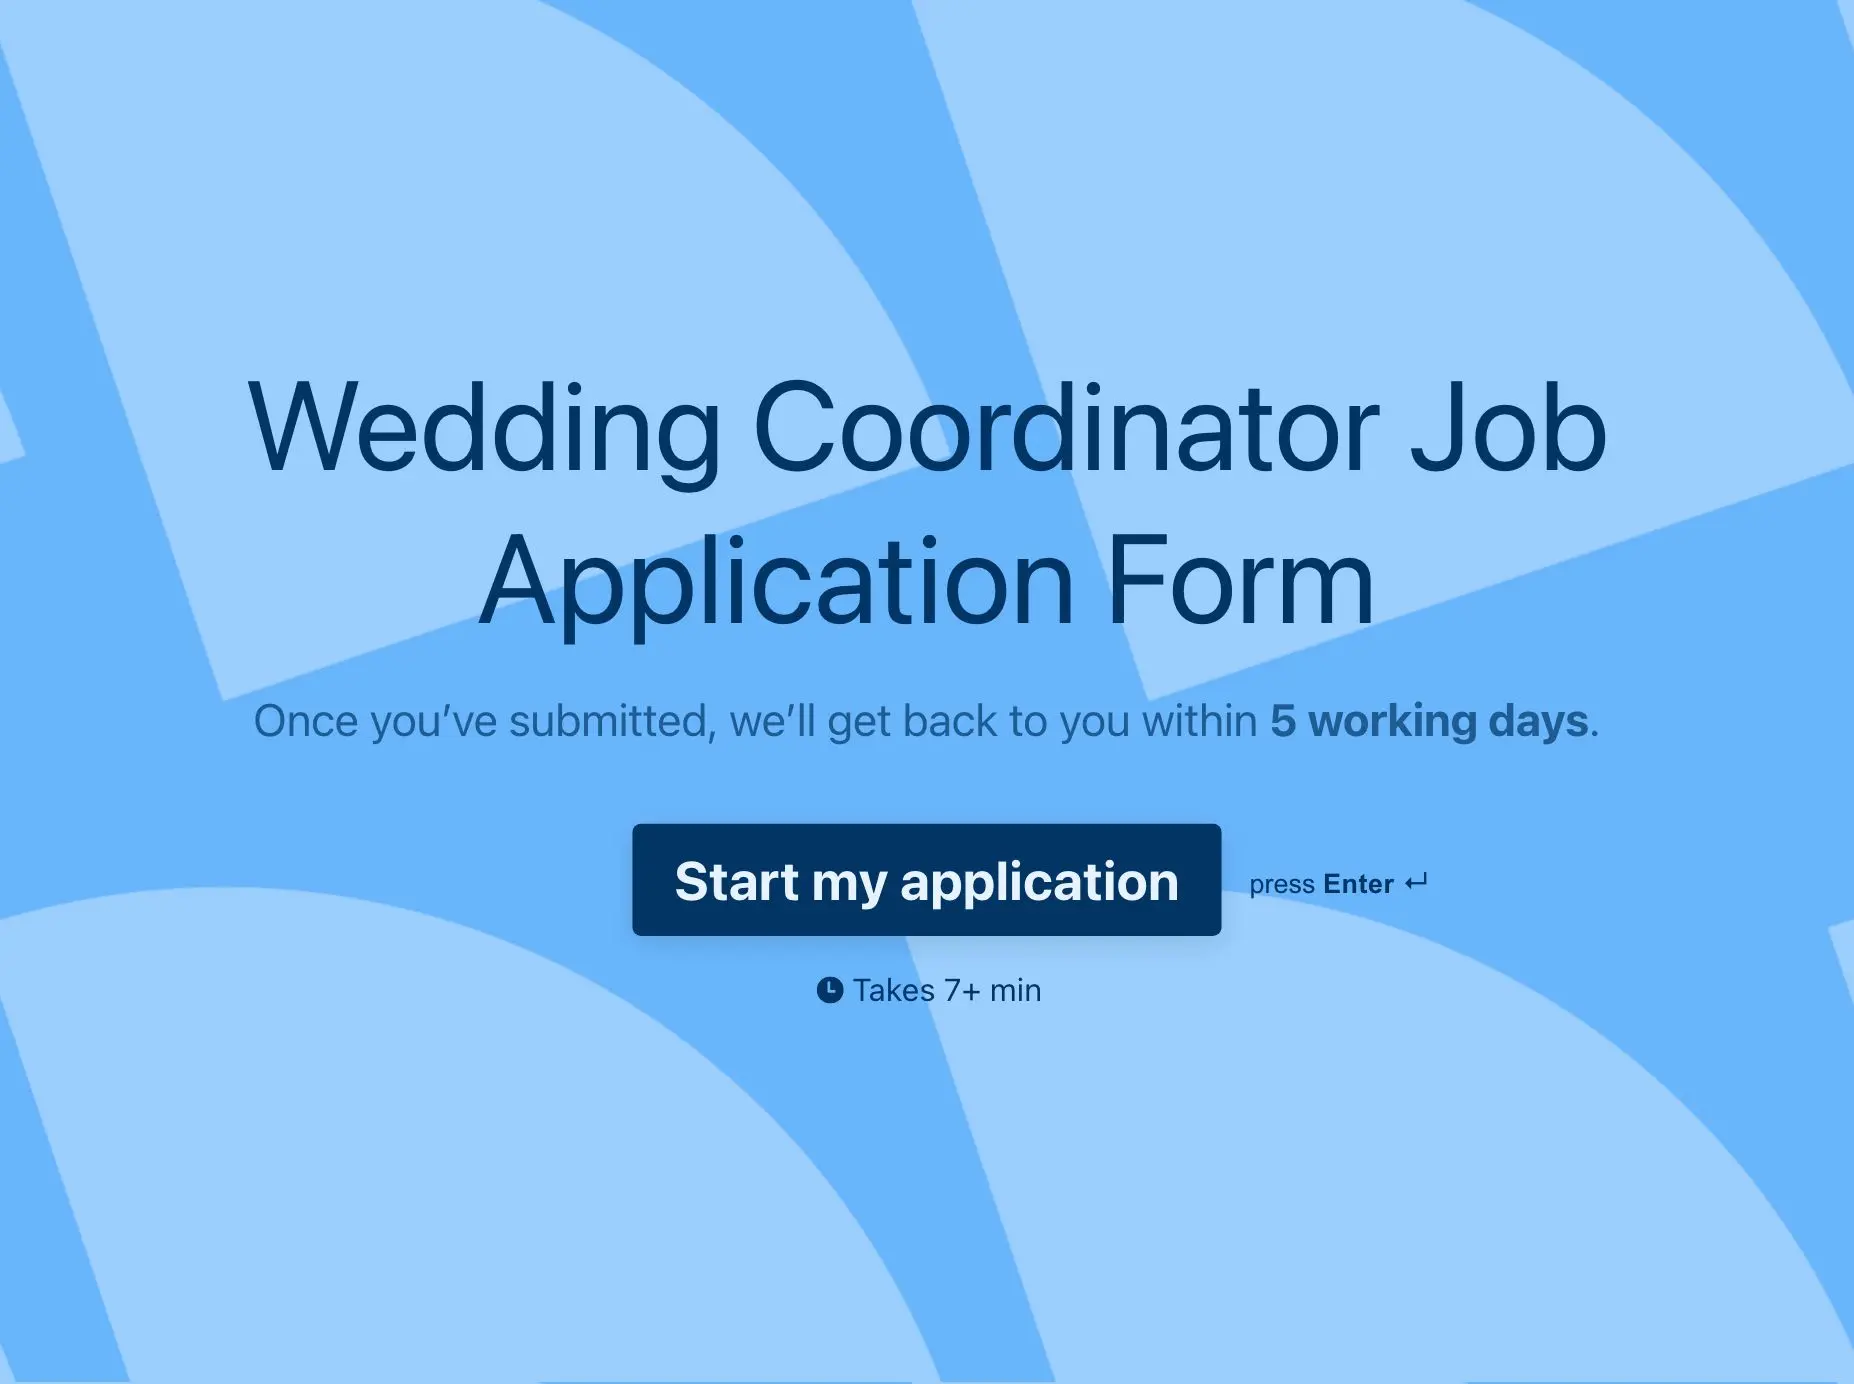 Wedding Coordinator Job Application Form Template Hero